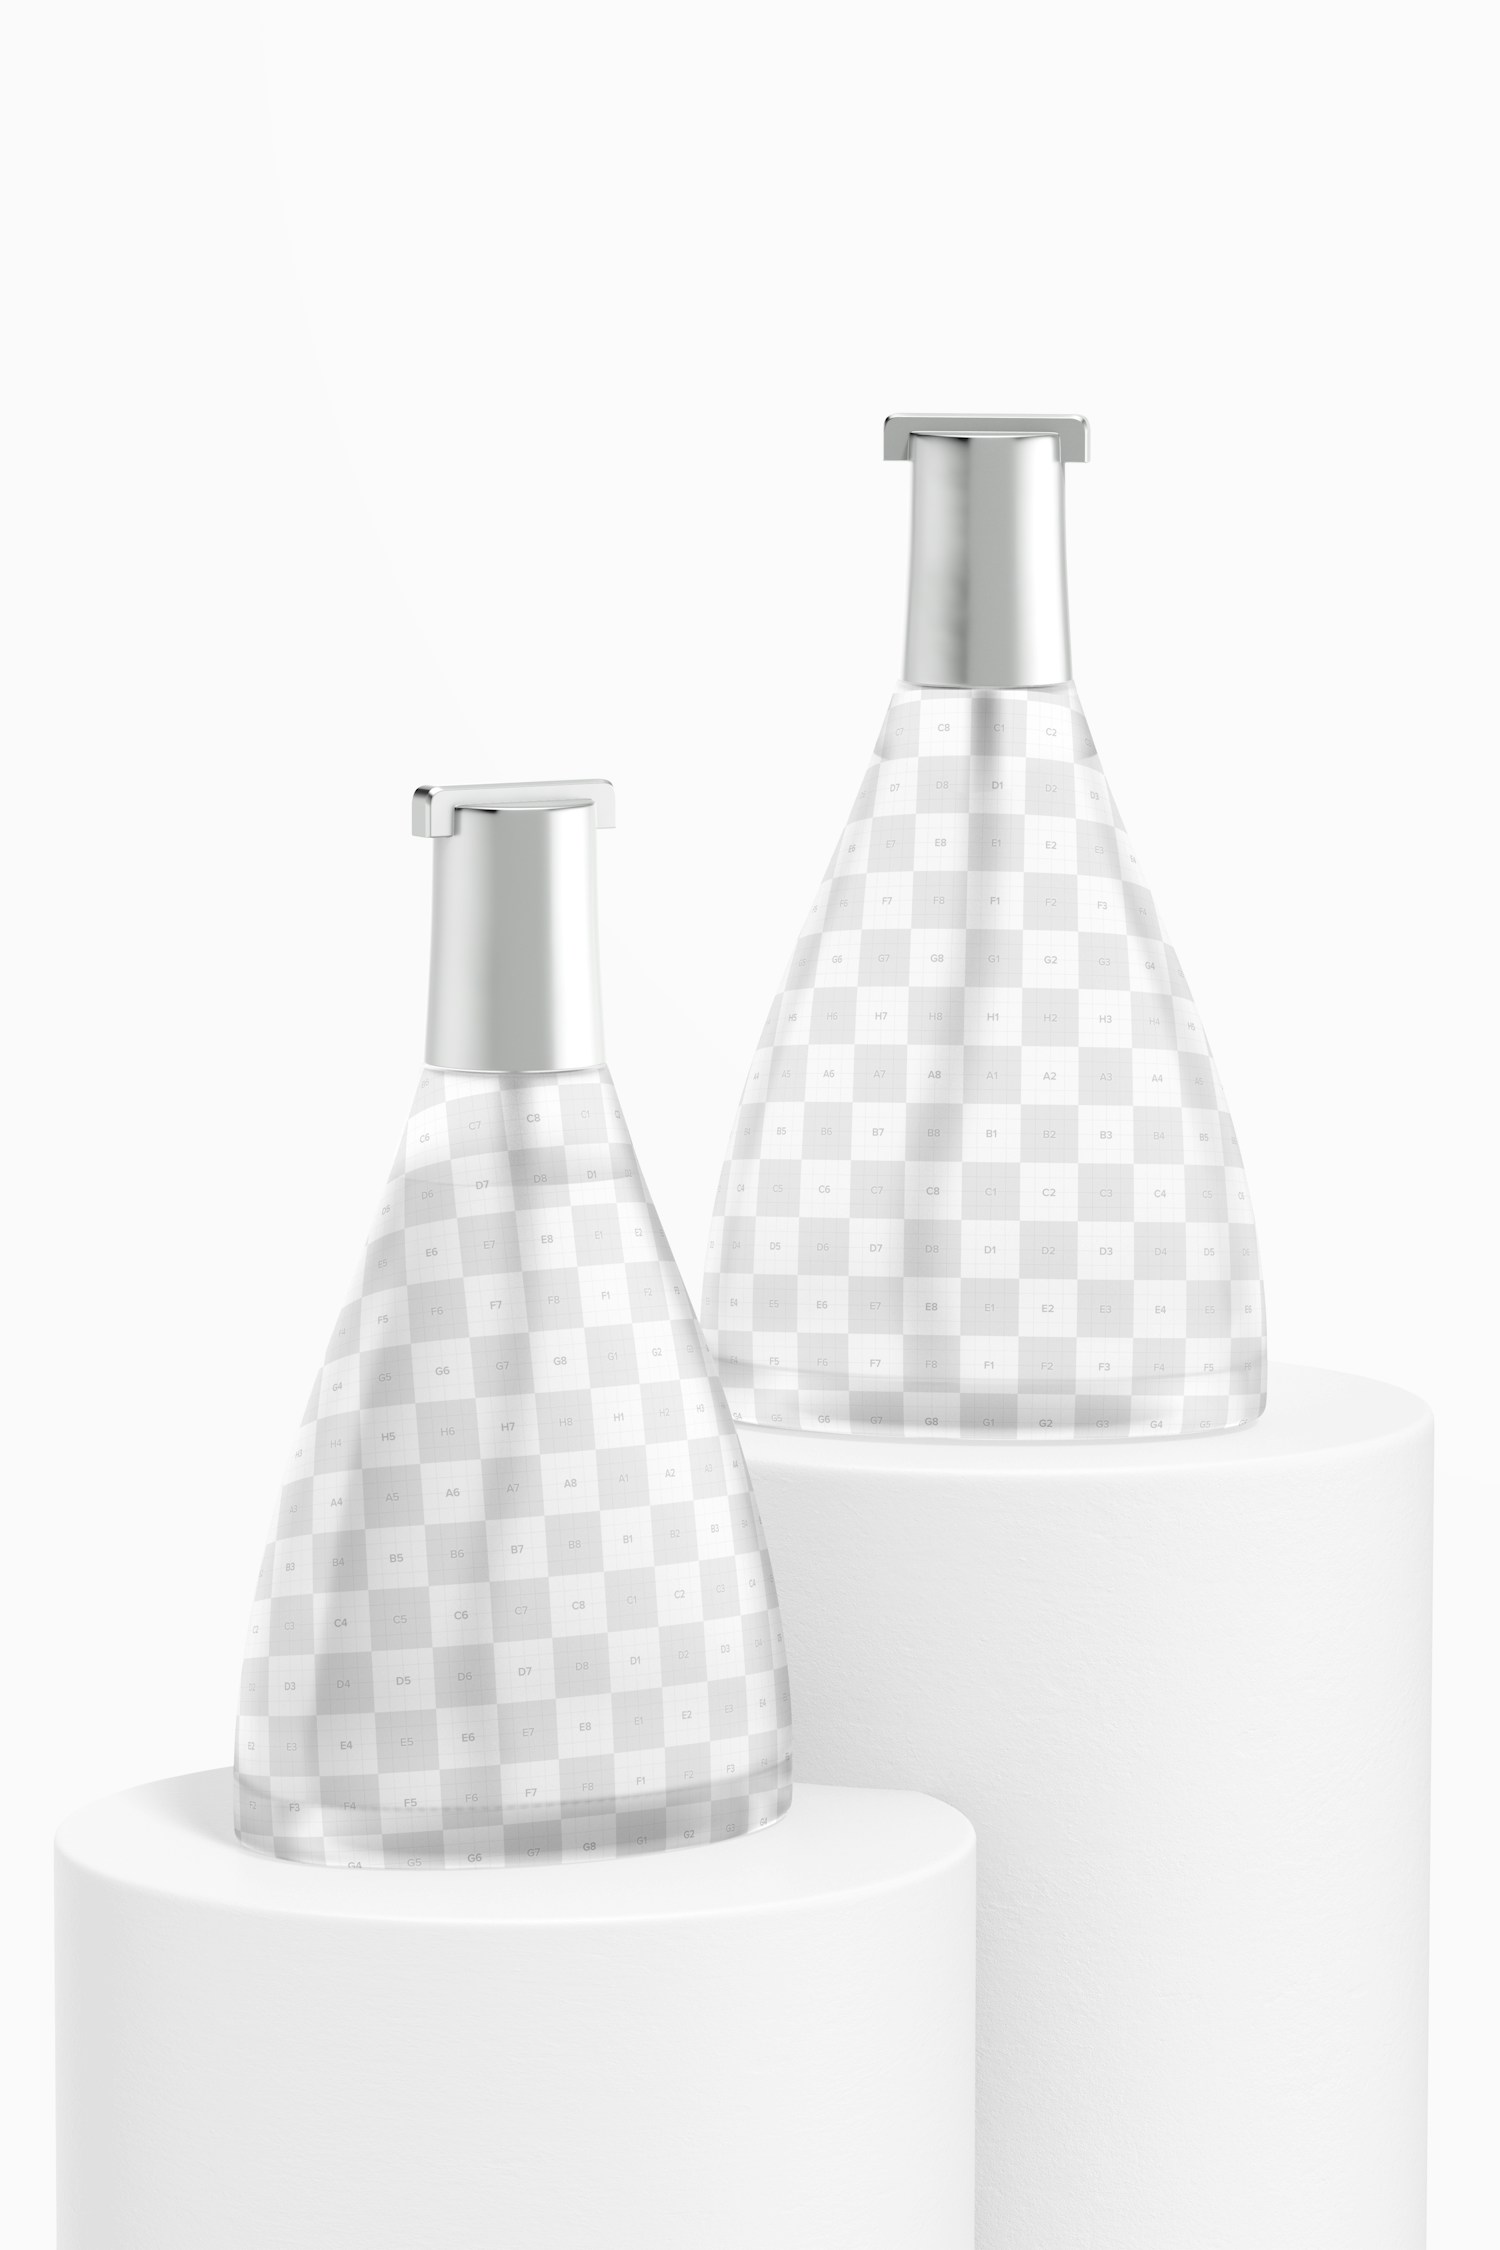 Triangular Luxury Perfume Bottles Mockup, Side View